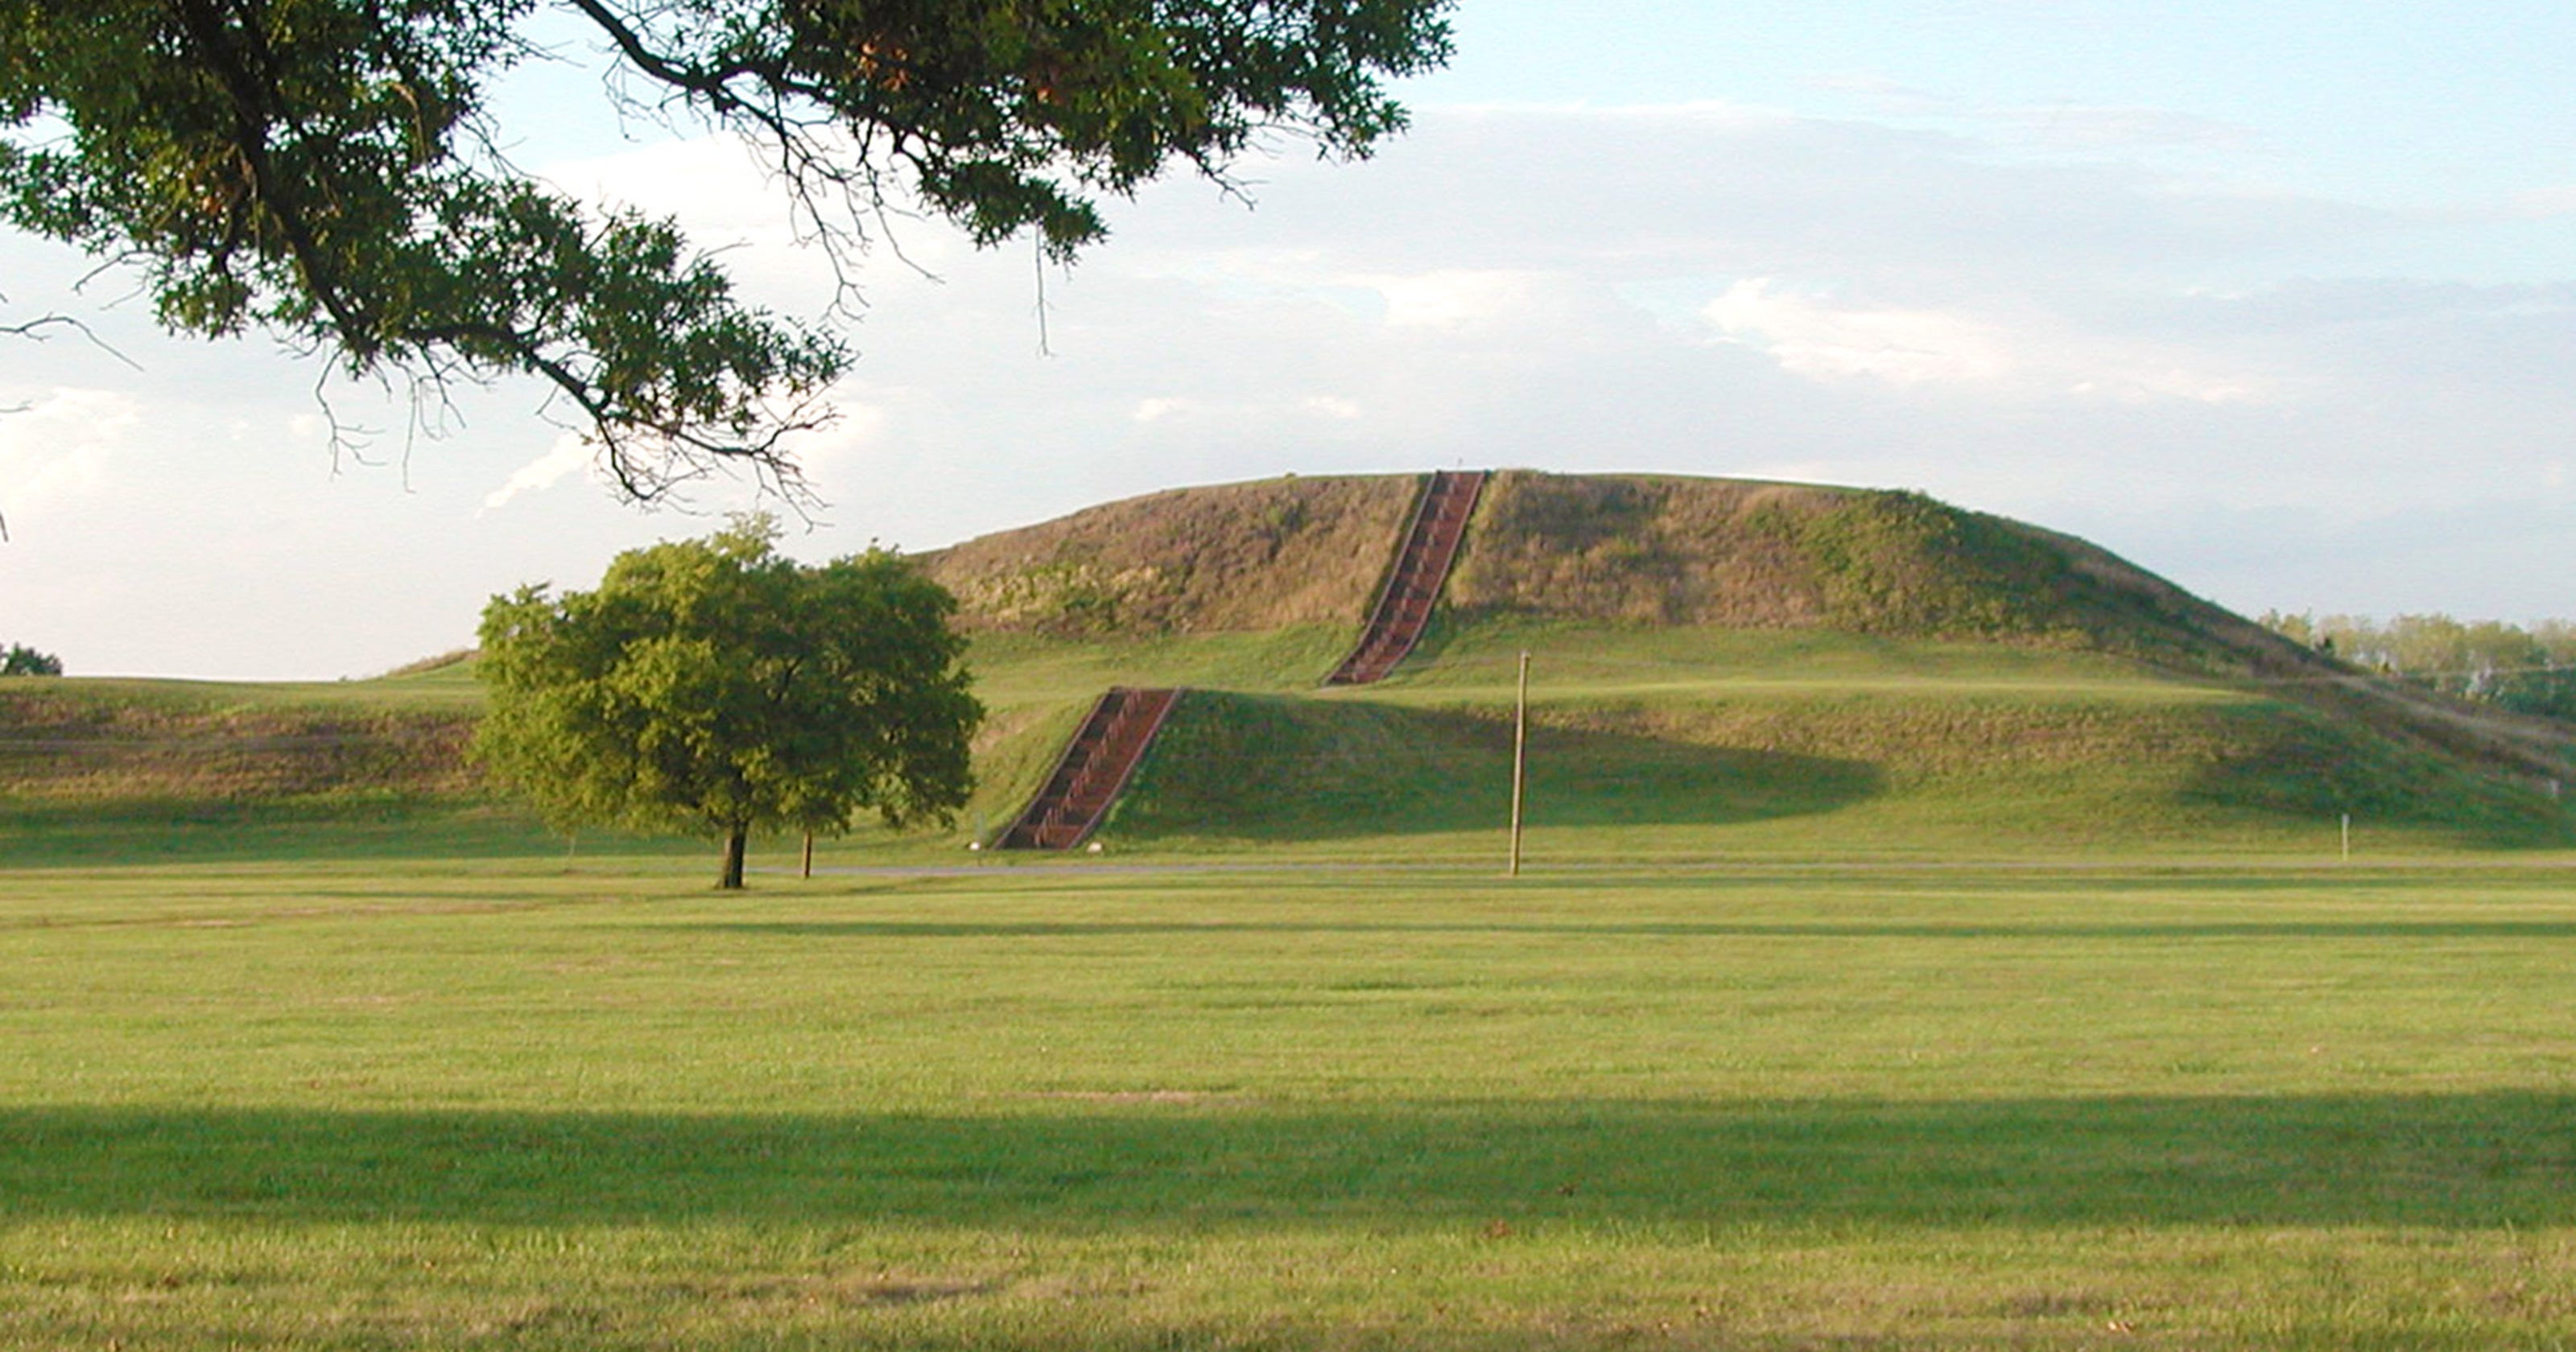 Can Newark Earthworks Replicate Cahokia Mounds Success